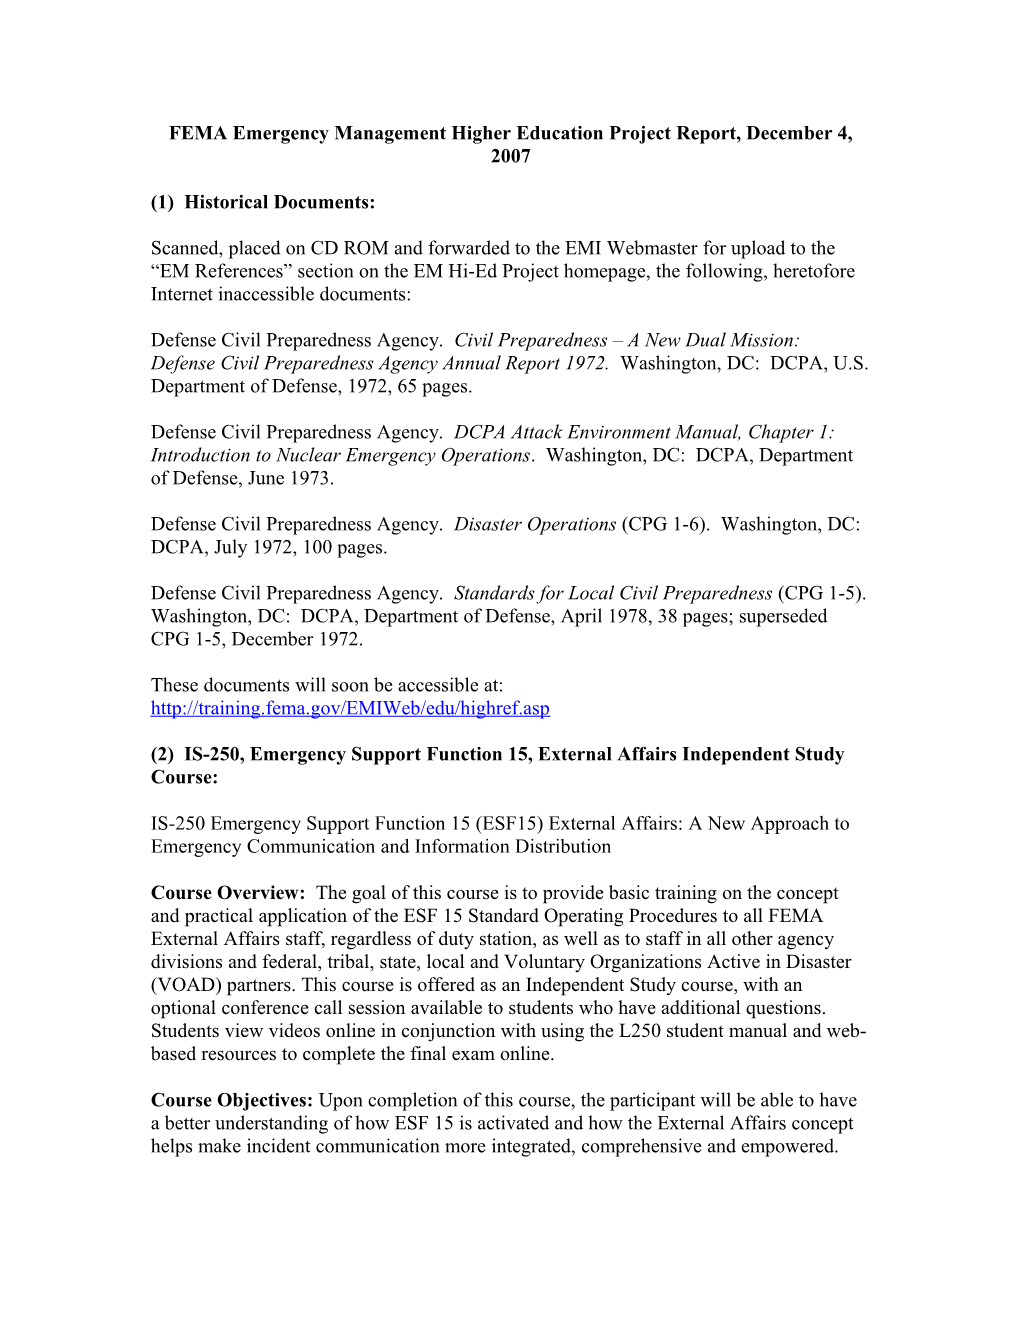 FEMA Emergency Management Higher Education Project Report, December 4, 2007